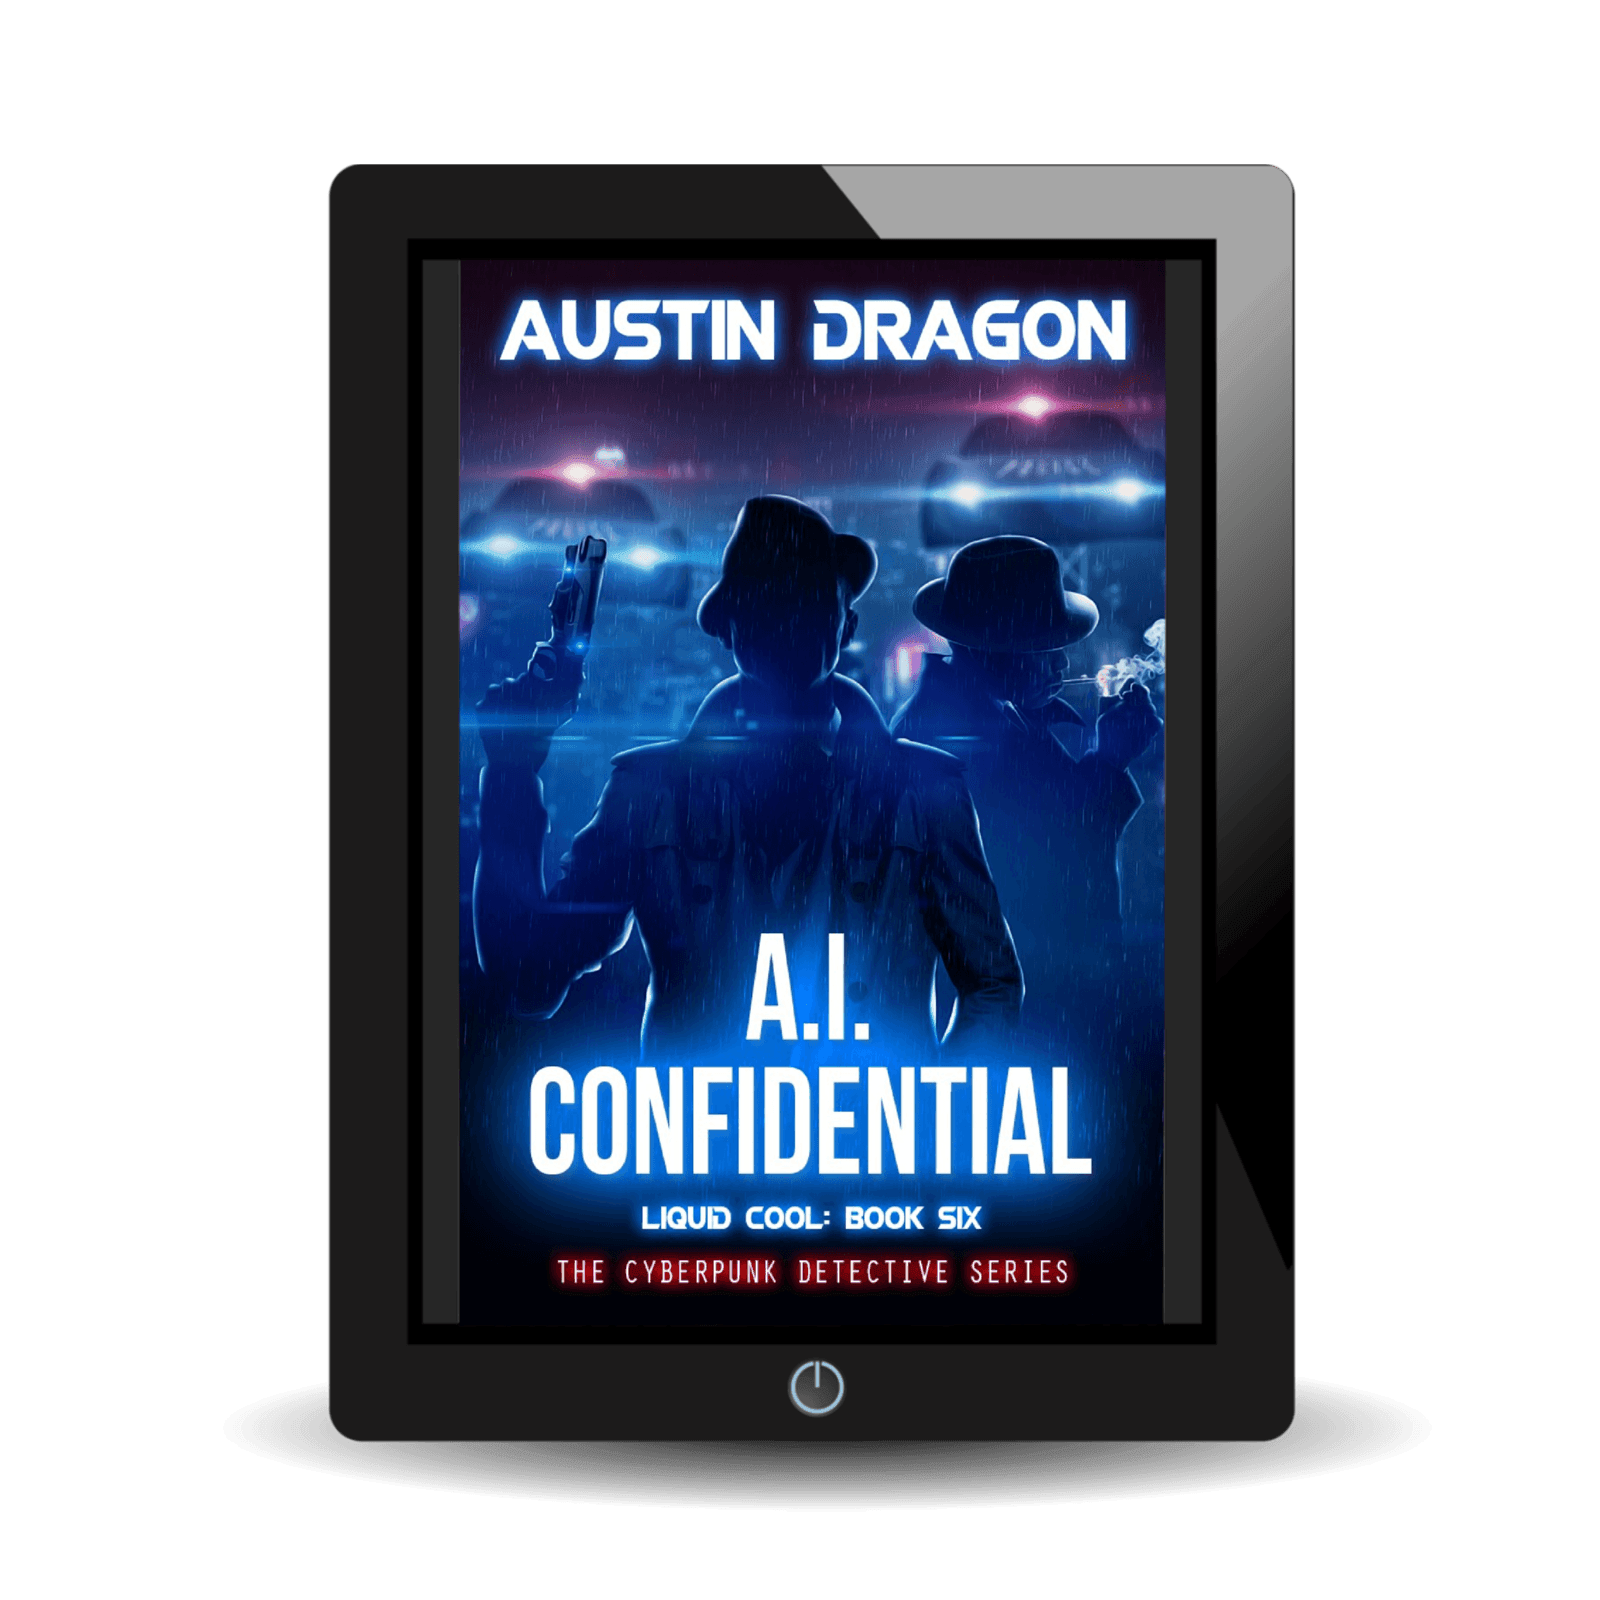 A.I. Confidential (Liquid Cool: The Cyberpunk Detective Series, Book 6) Ebook